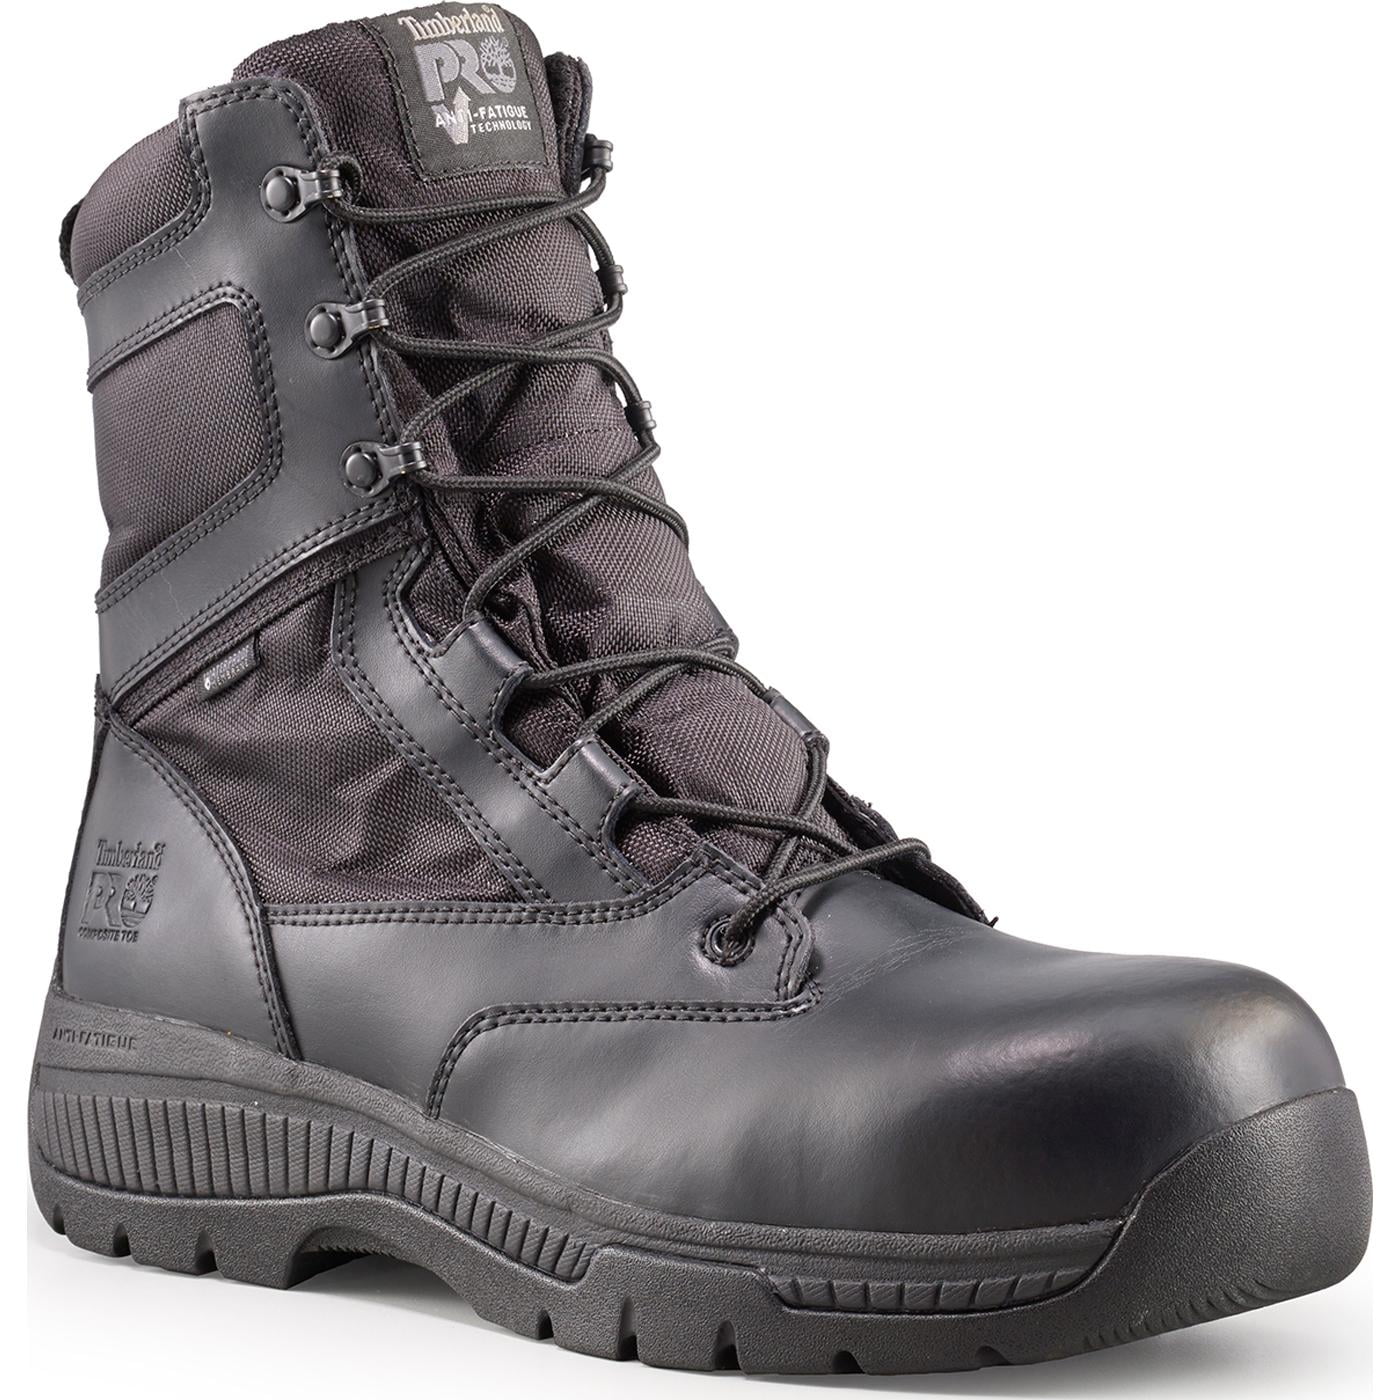 MARTENS R13400001 Work Boots,Sz9,All Leather,Black,6inH,PR DR 